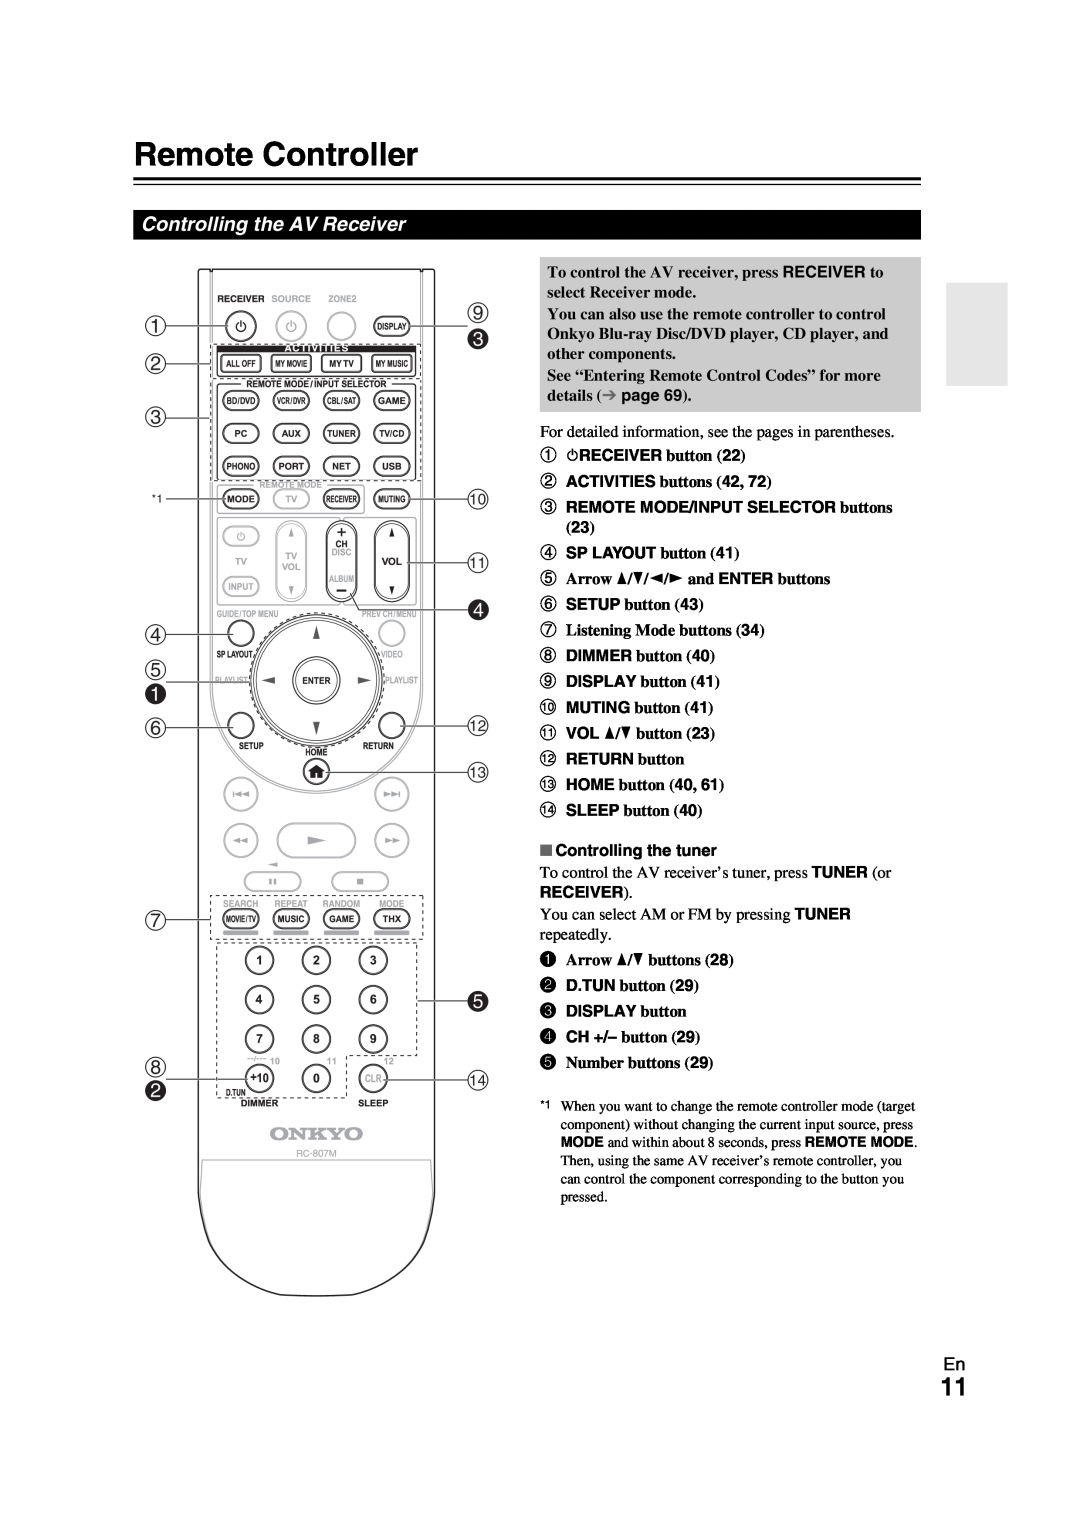 Onkyo TX-NR709 Remote Controller, k d d e a fl m g e h bn, Controlling the AV Receiver, dSP LAYOUT button, lRETURN button 